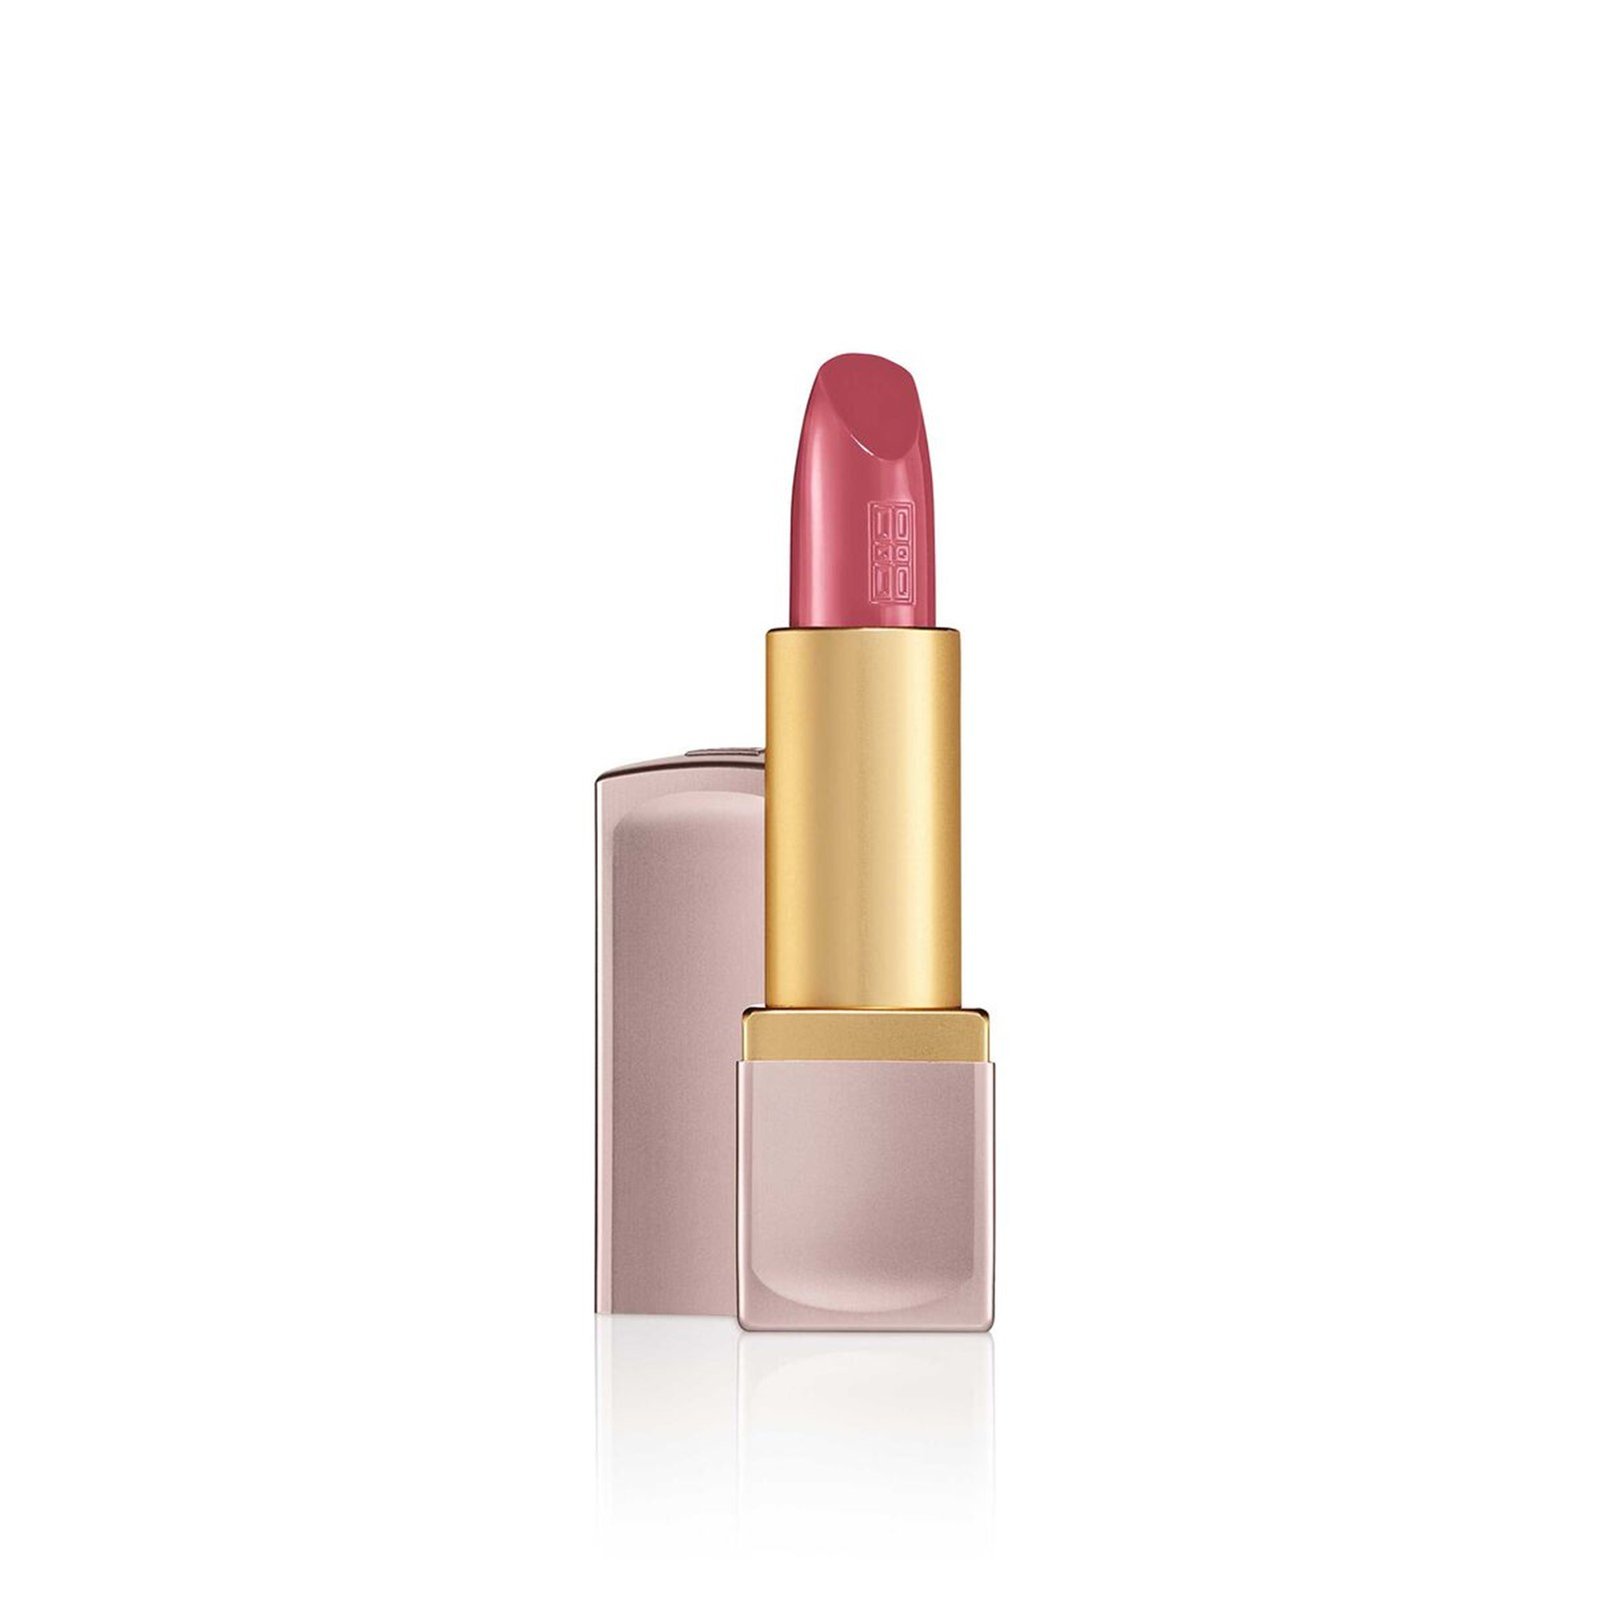 Elizabeth Arden Lip Color Lipstick 08 Breathless 4g (0.14 oz)